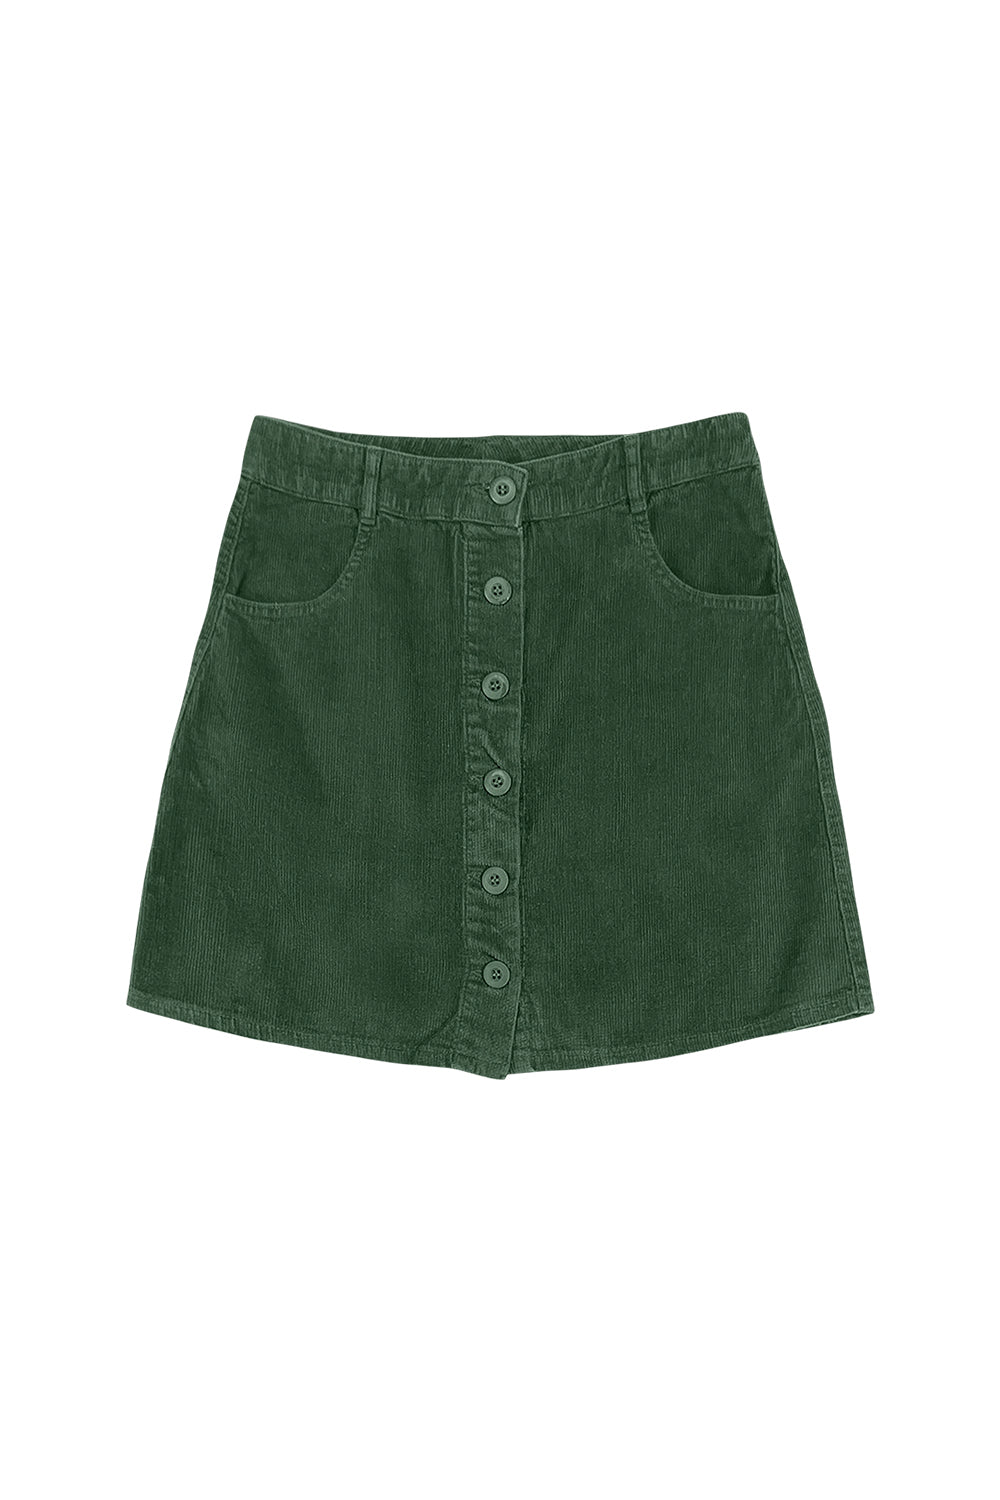 Corduroy Vassar Skirt | Jungmaven Hemp Clothing & Accessories / Color: Hunter Green